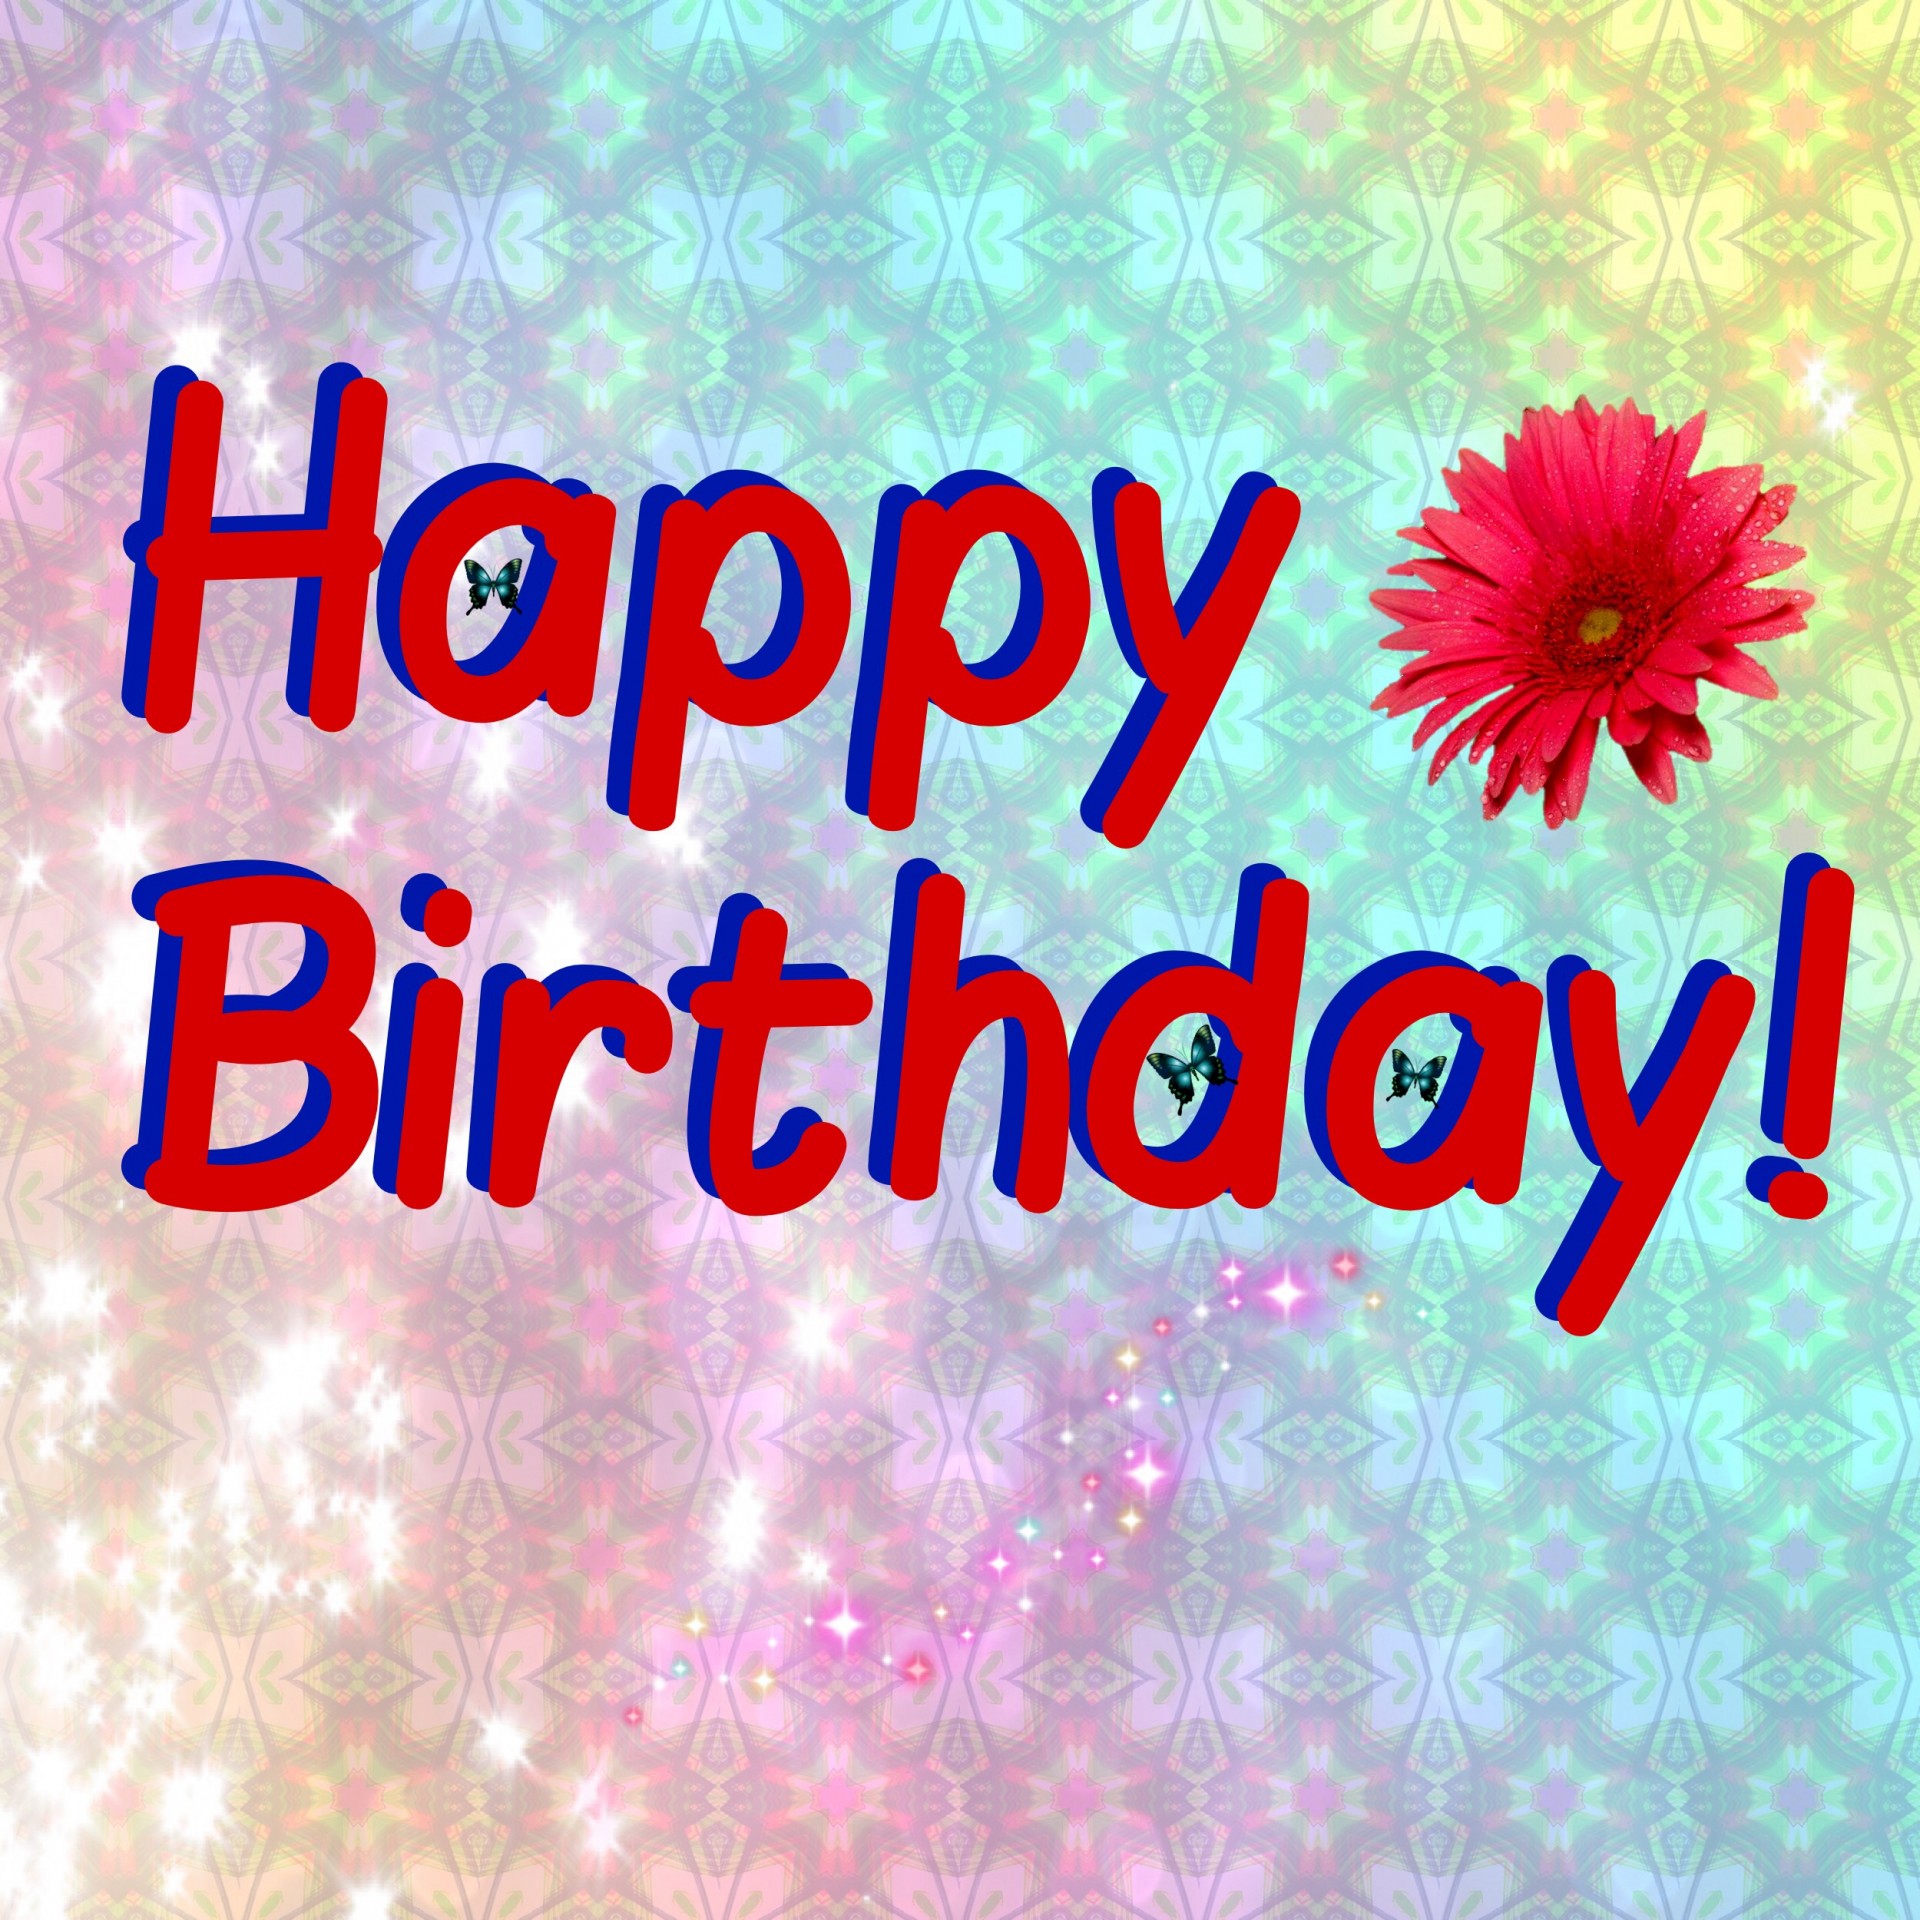 Happy Birthday! Free Stock Photo Public Domain Pictures